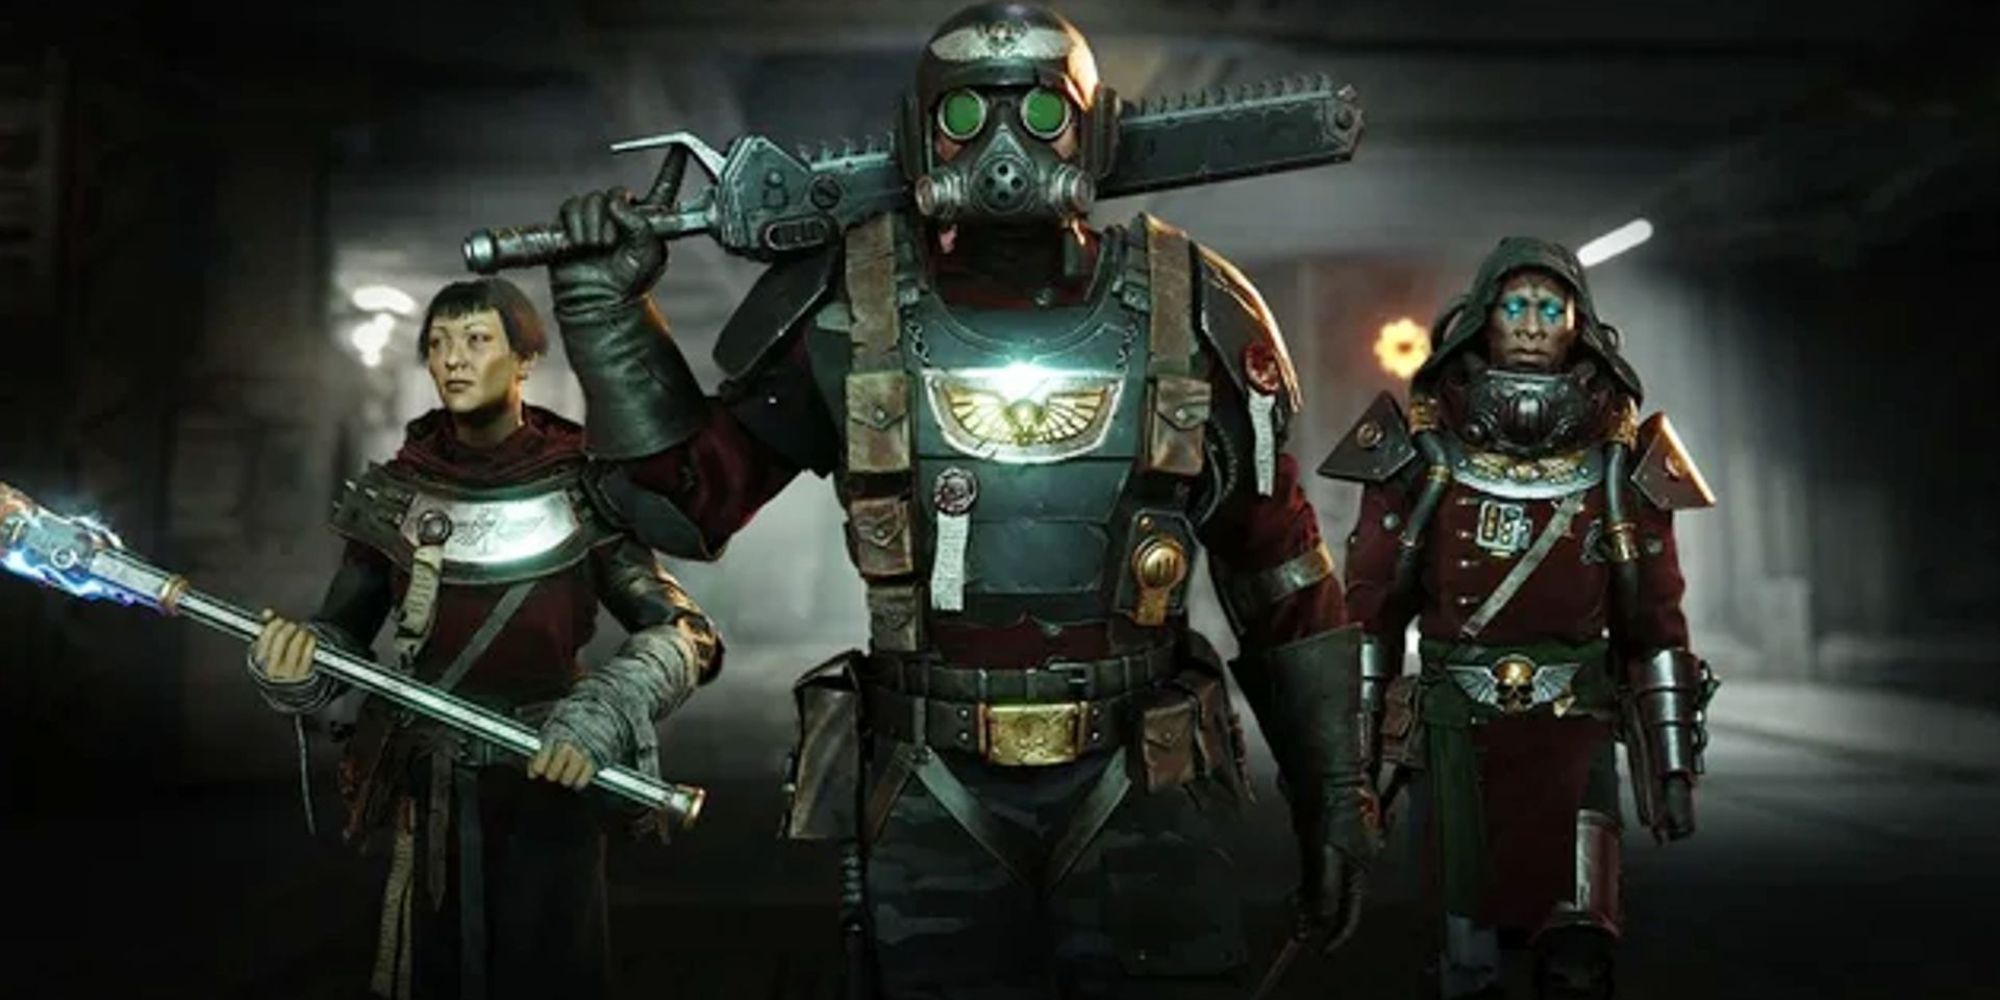 A trio of armed characters in Warhammer 40,000: Darktide